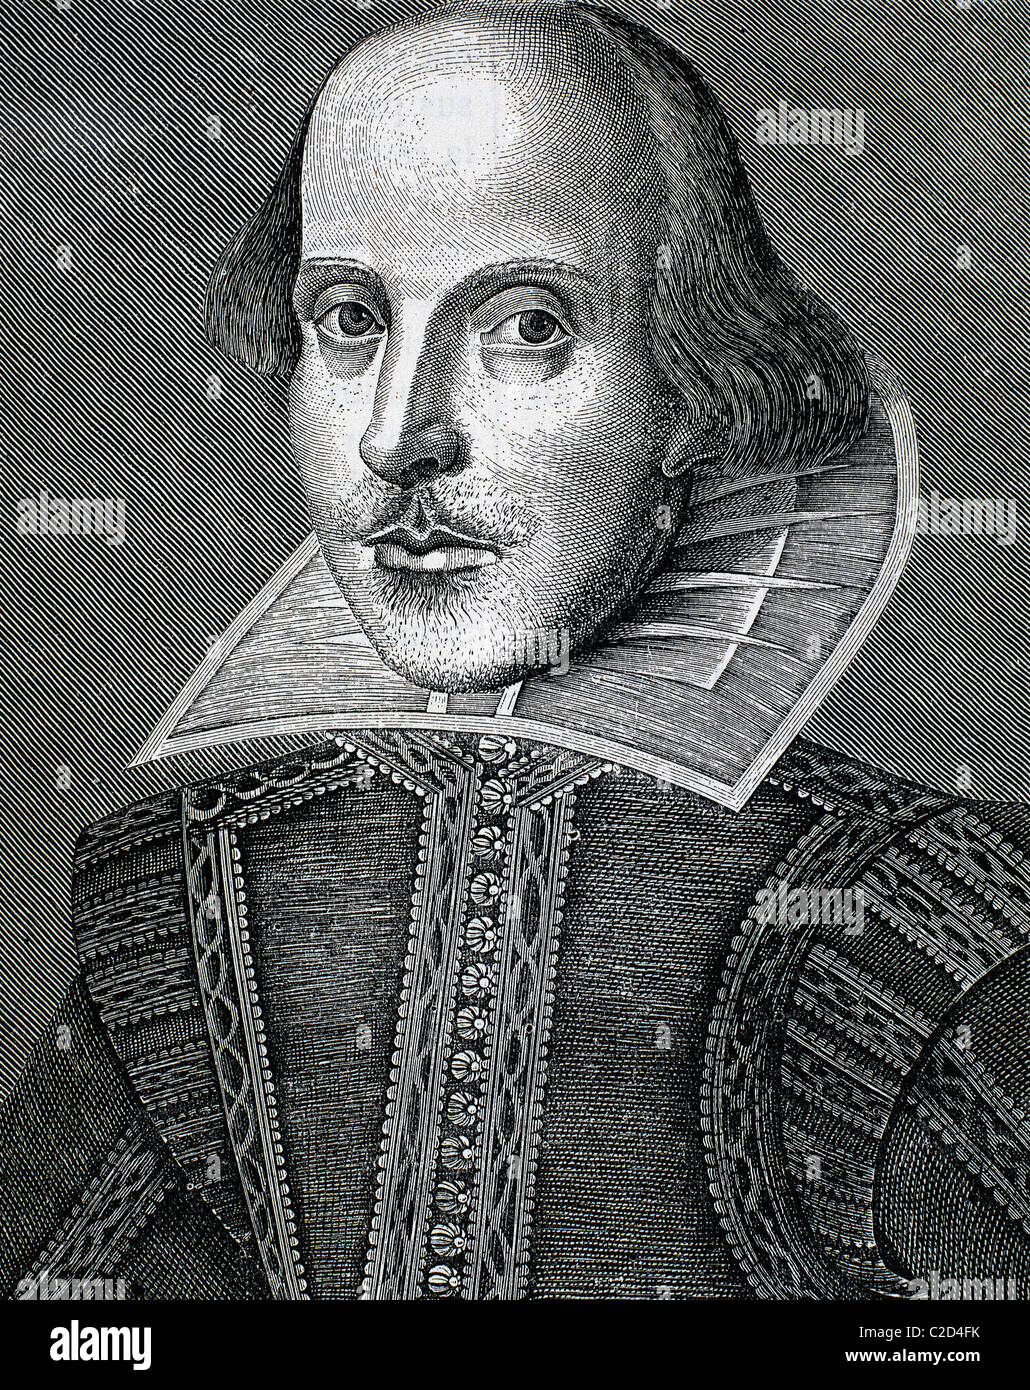 SHAKESPEARE, William (Stratford-on-Avon ,1564-1616). English writer. The nineteenth century engraving. Stock Photo